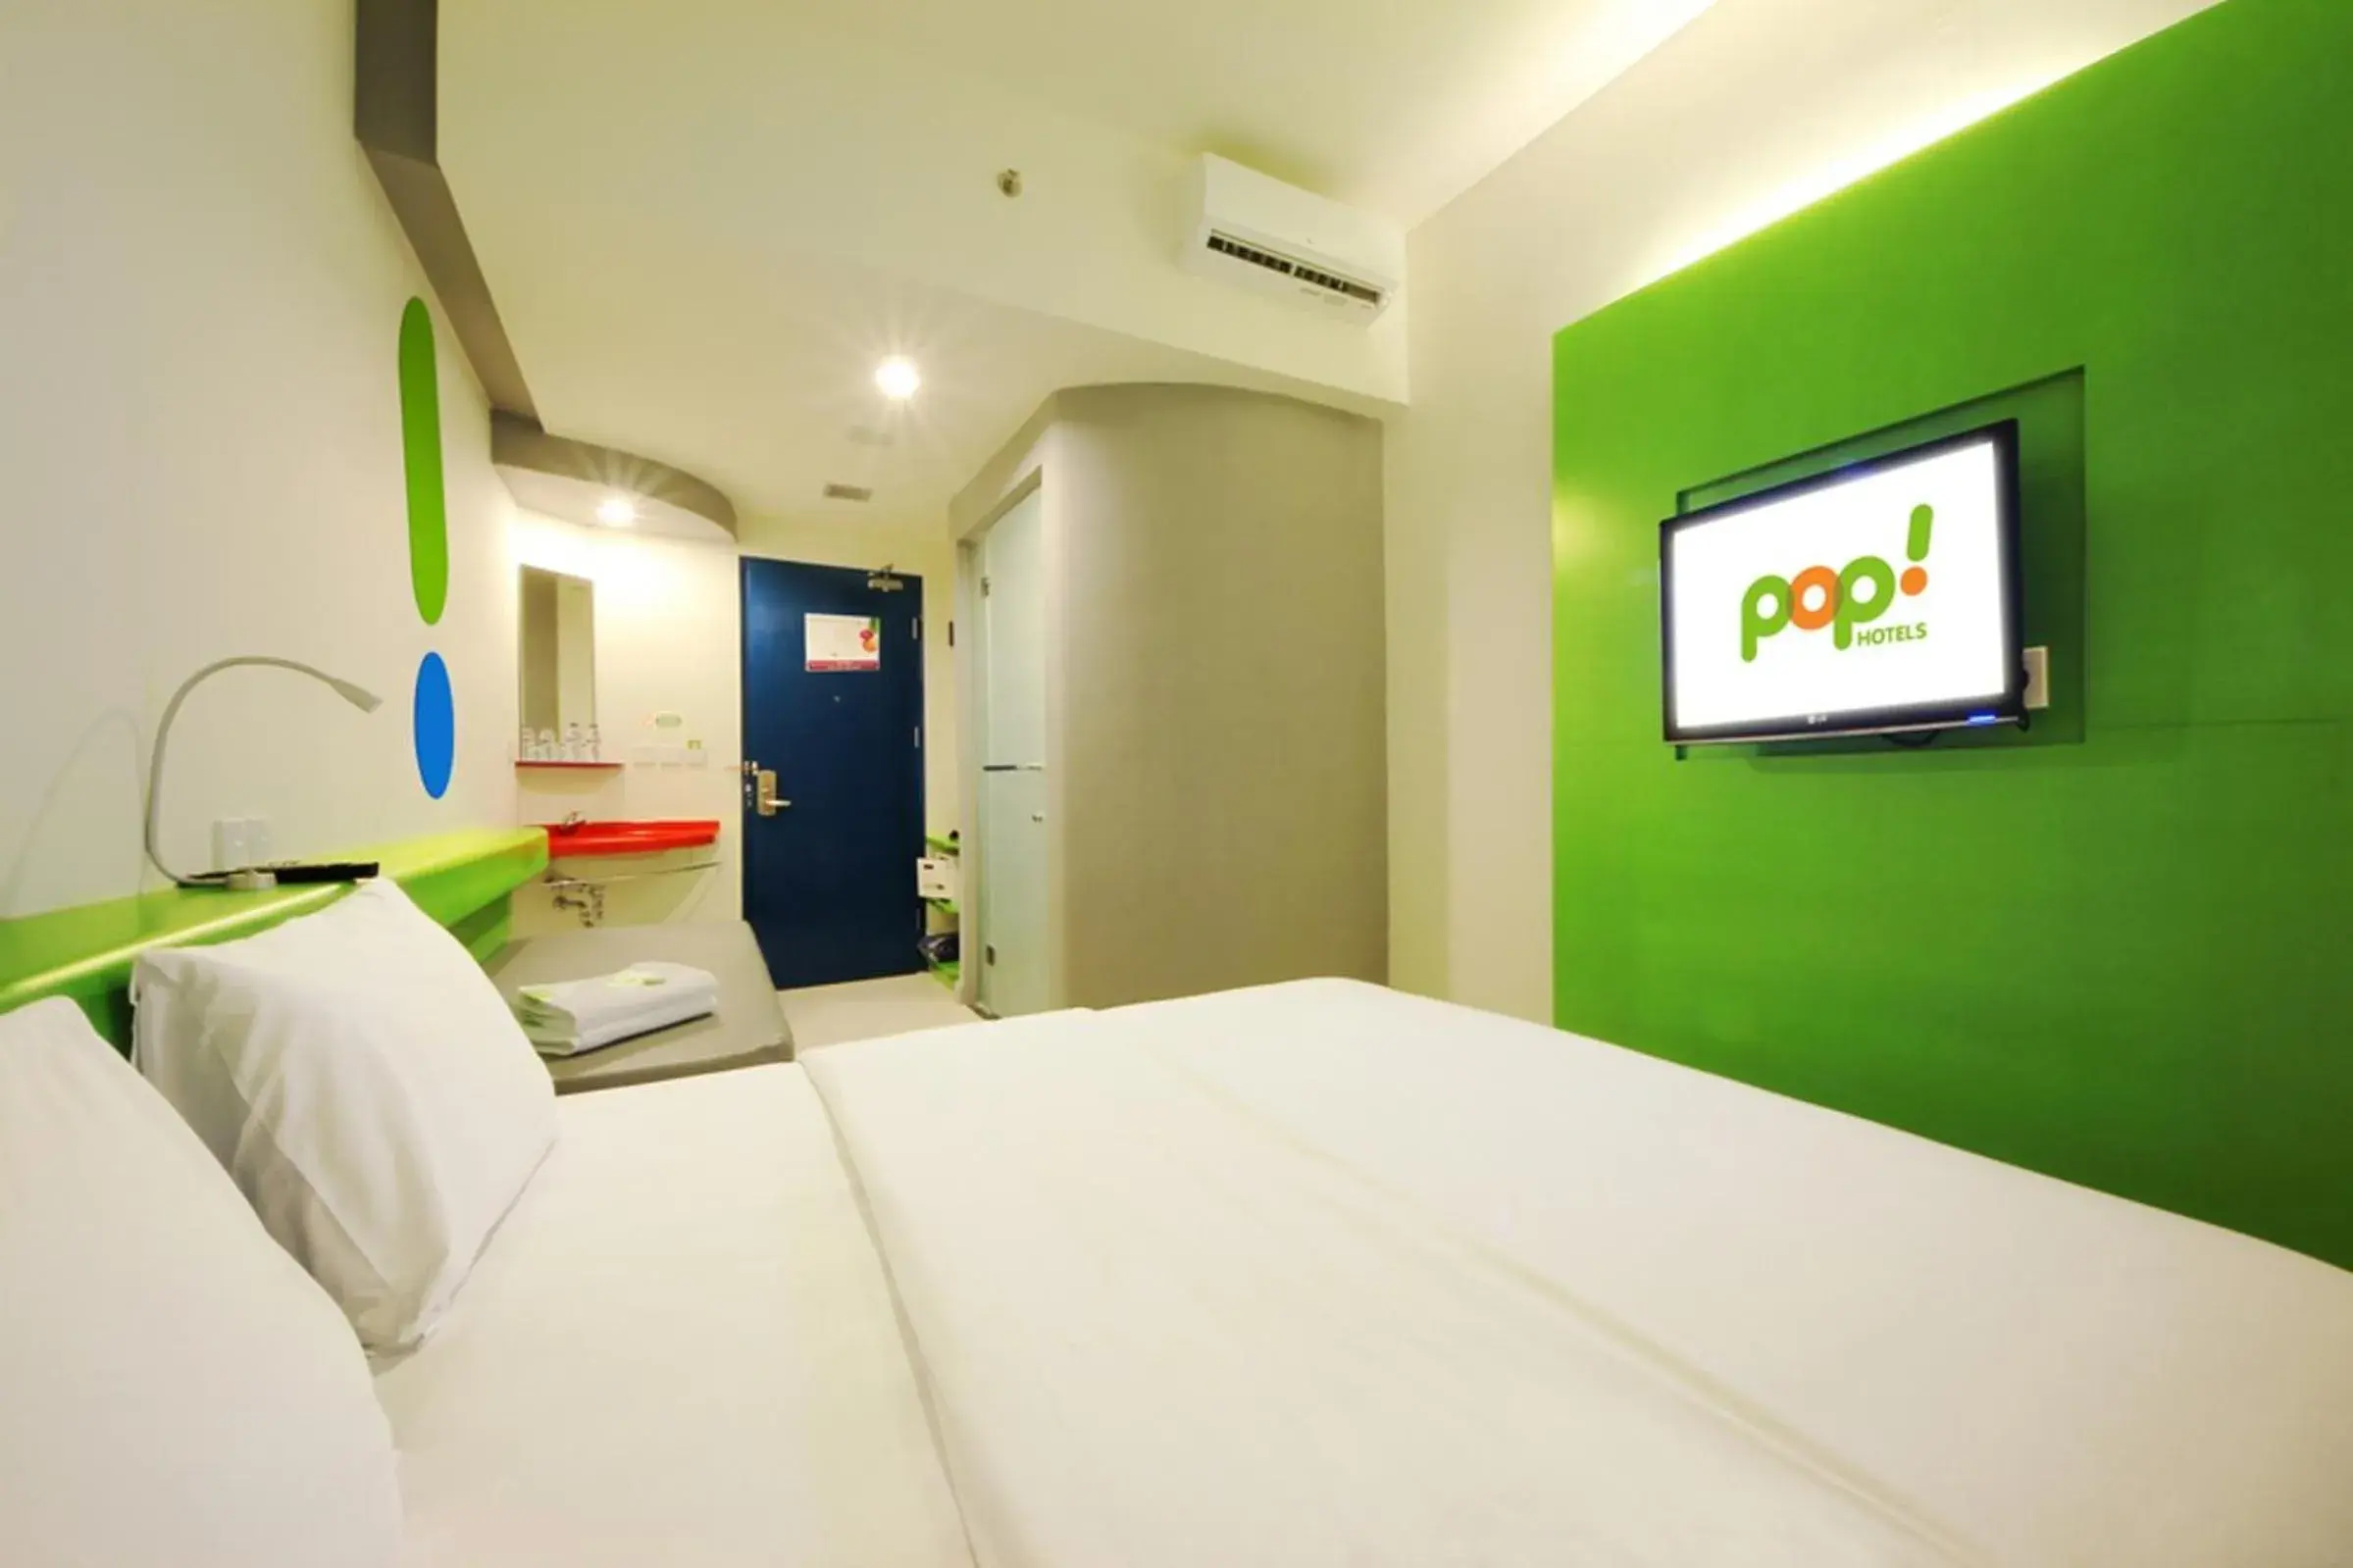 Bedroom in Pop! Hotel Kemang Jakarta